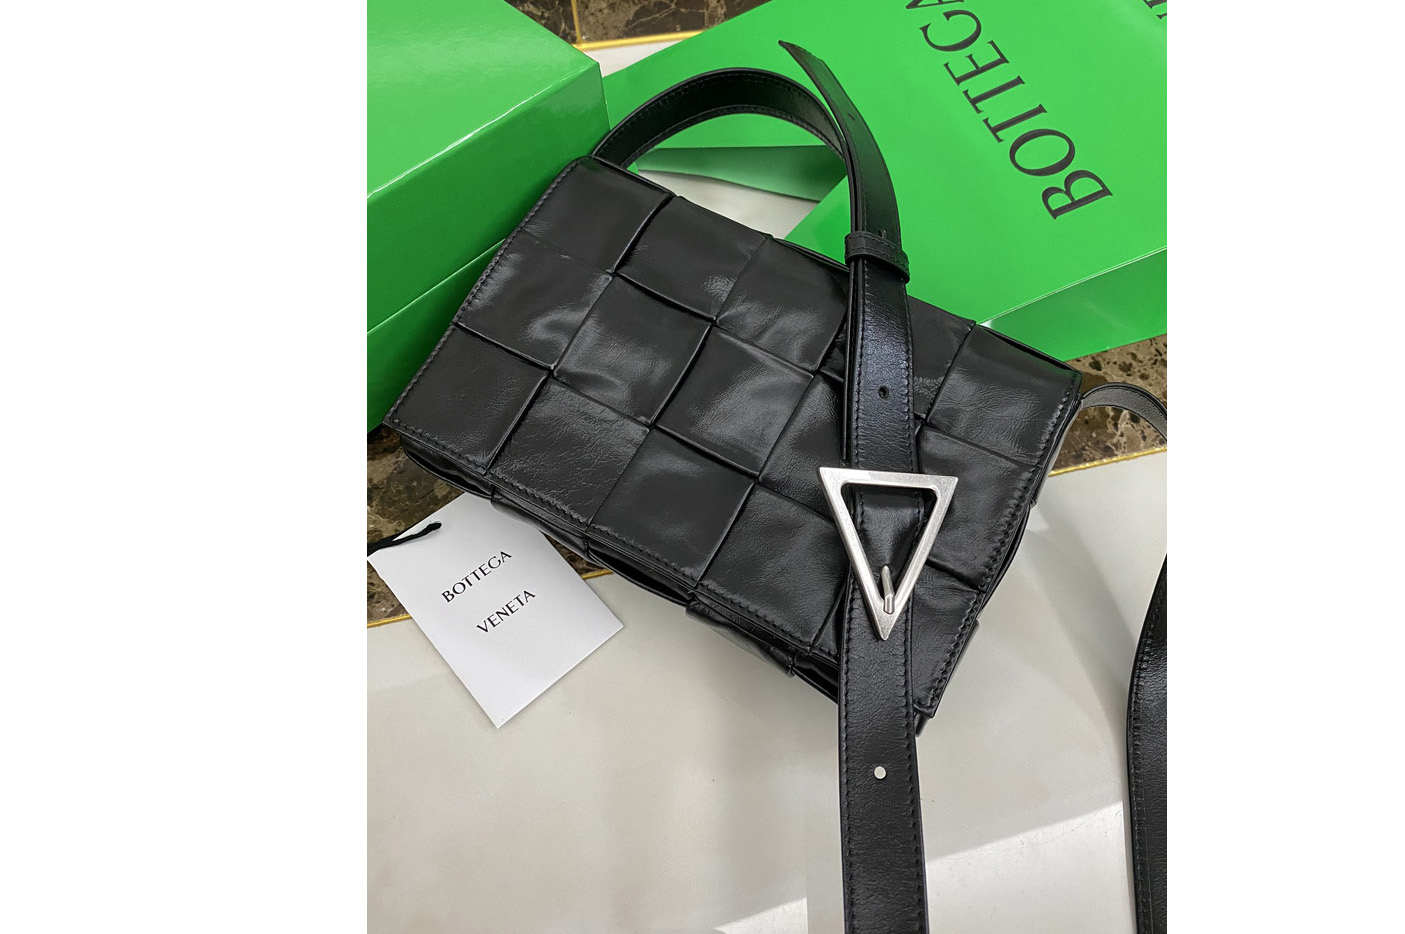 Bottega Veneta 667298 Cassette cross-body bag in Black Intreccio leather